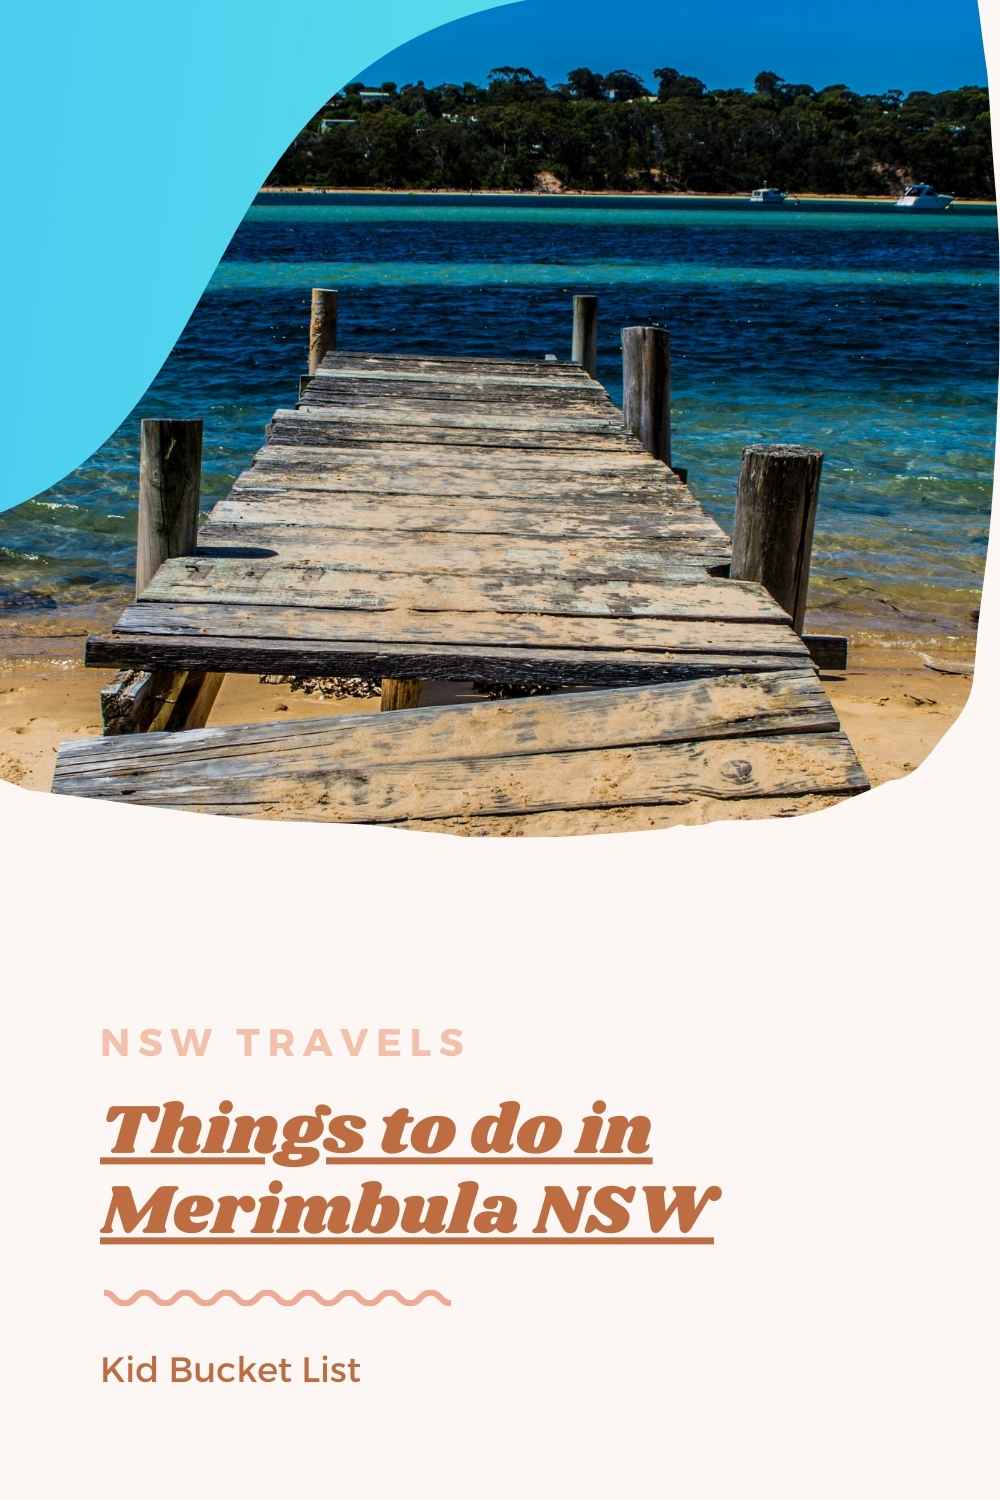 Things to do in Merimbula NSW